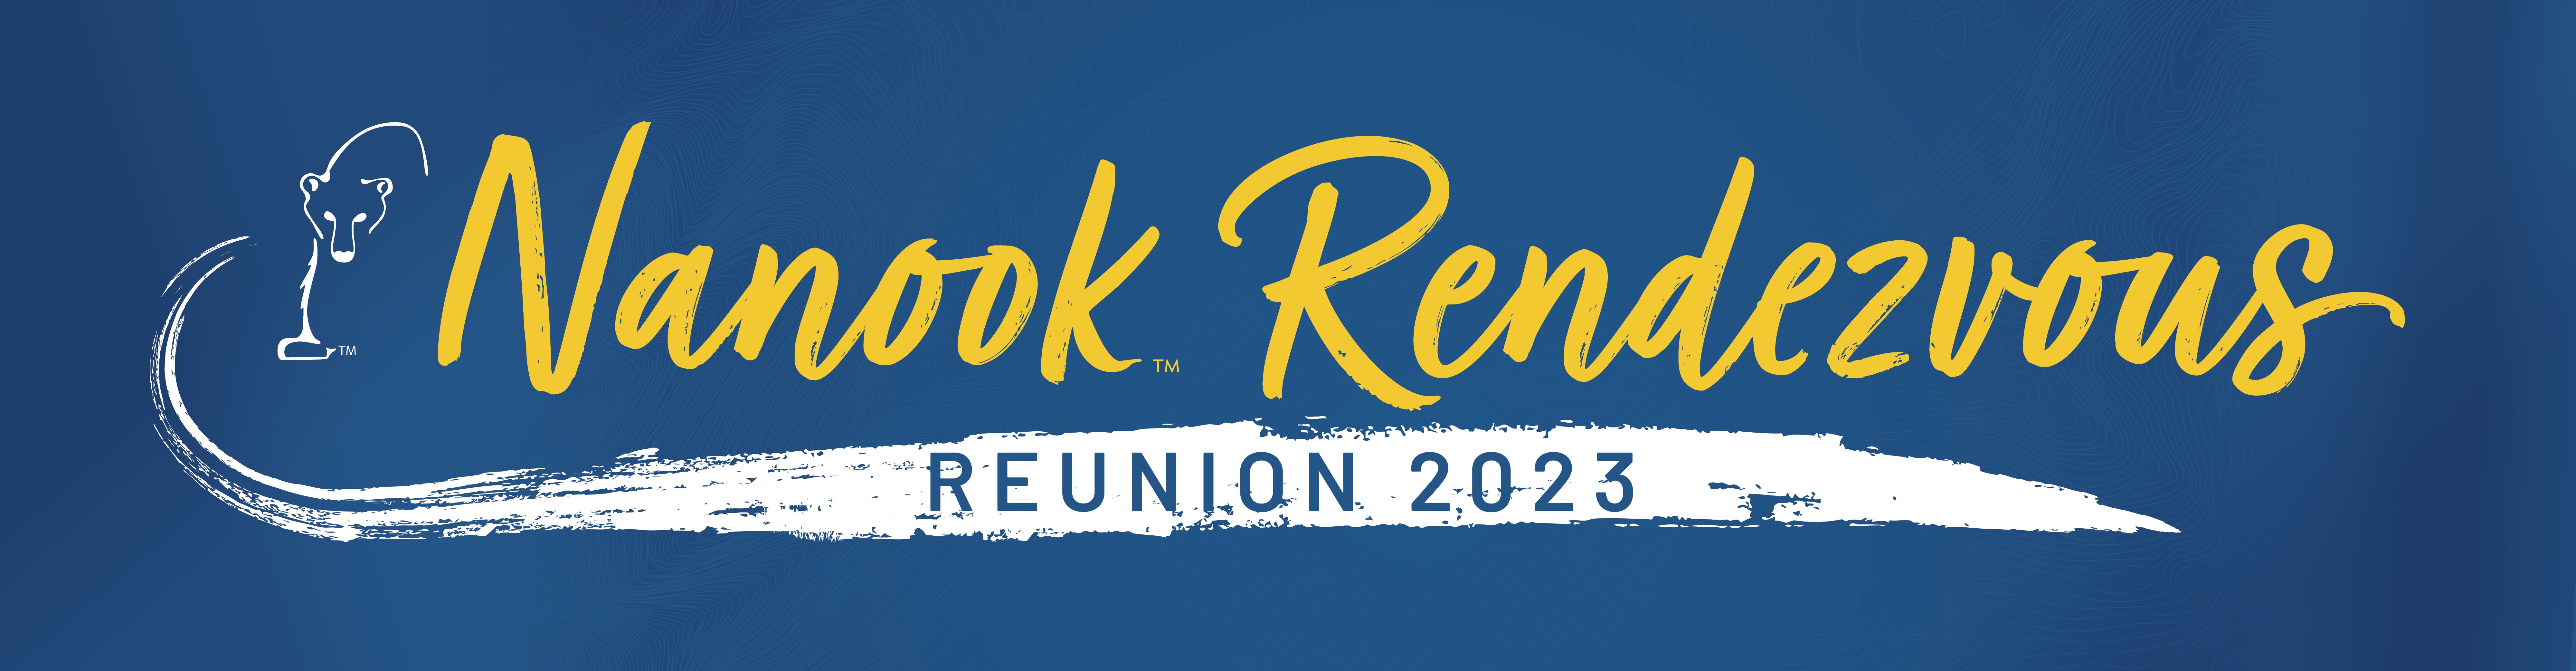 2023 Reunion